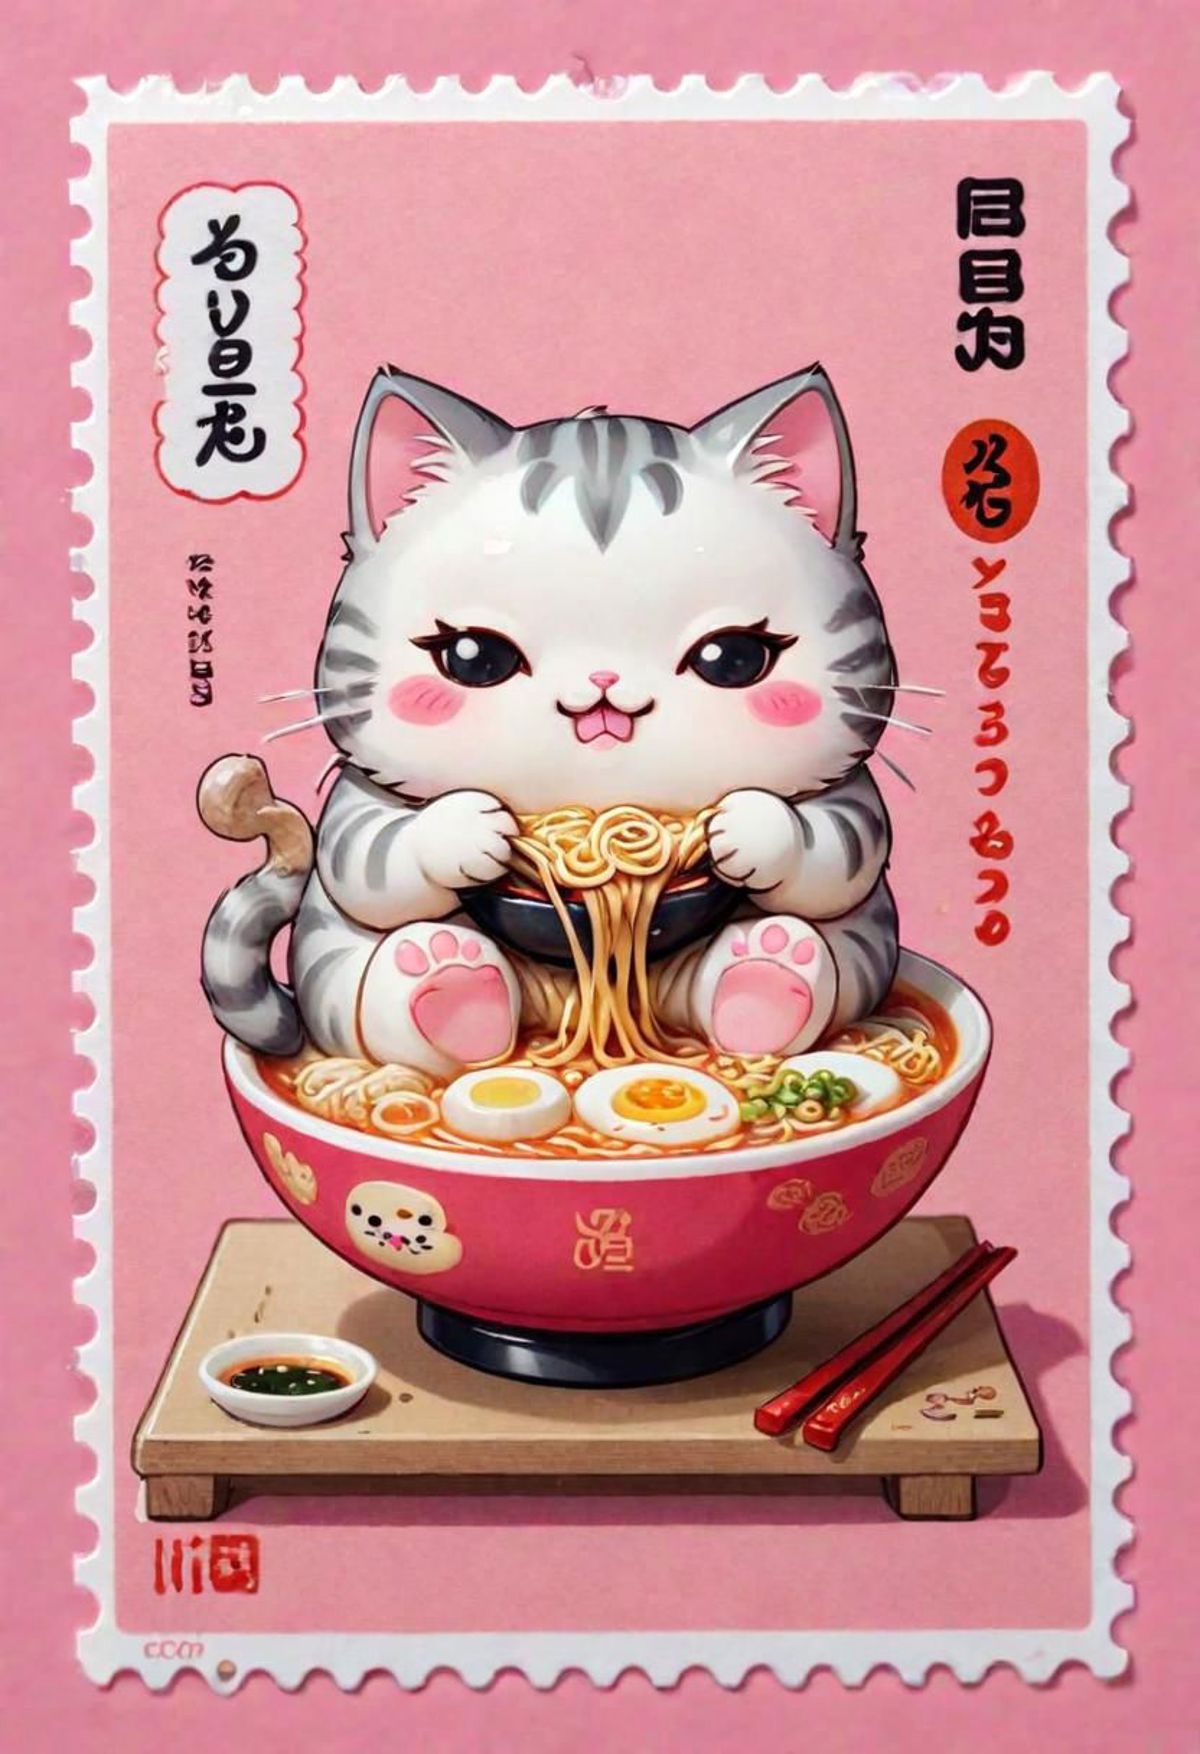 A cartoon kitten sitting in a bowl of noodles.